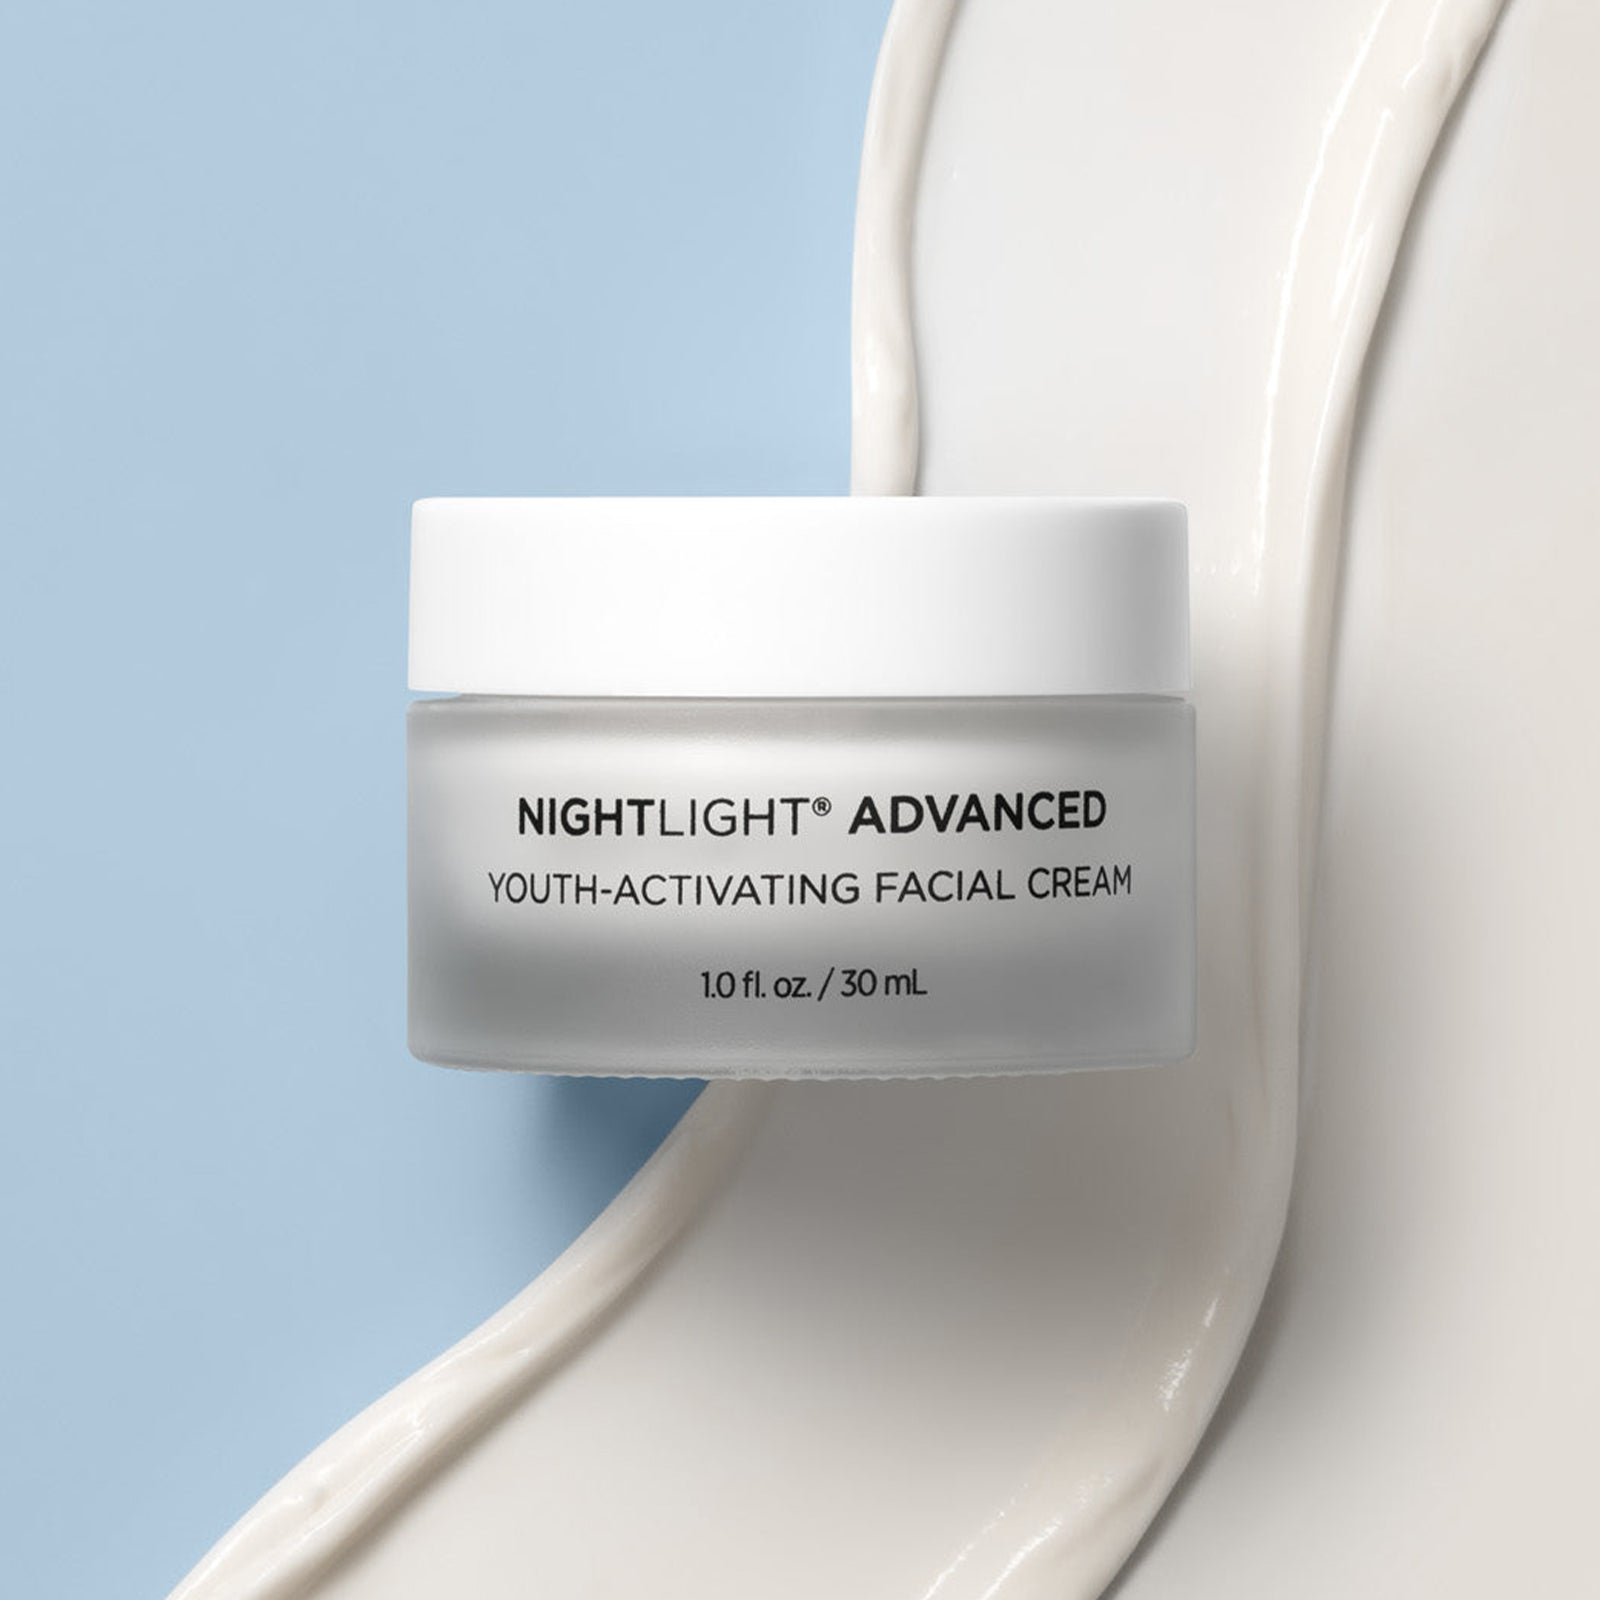 Nightlight® Advanced Facial Cream